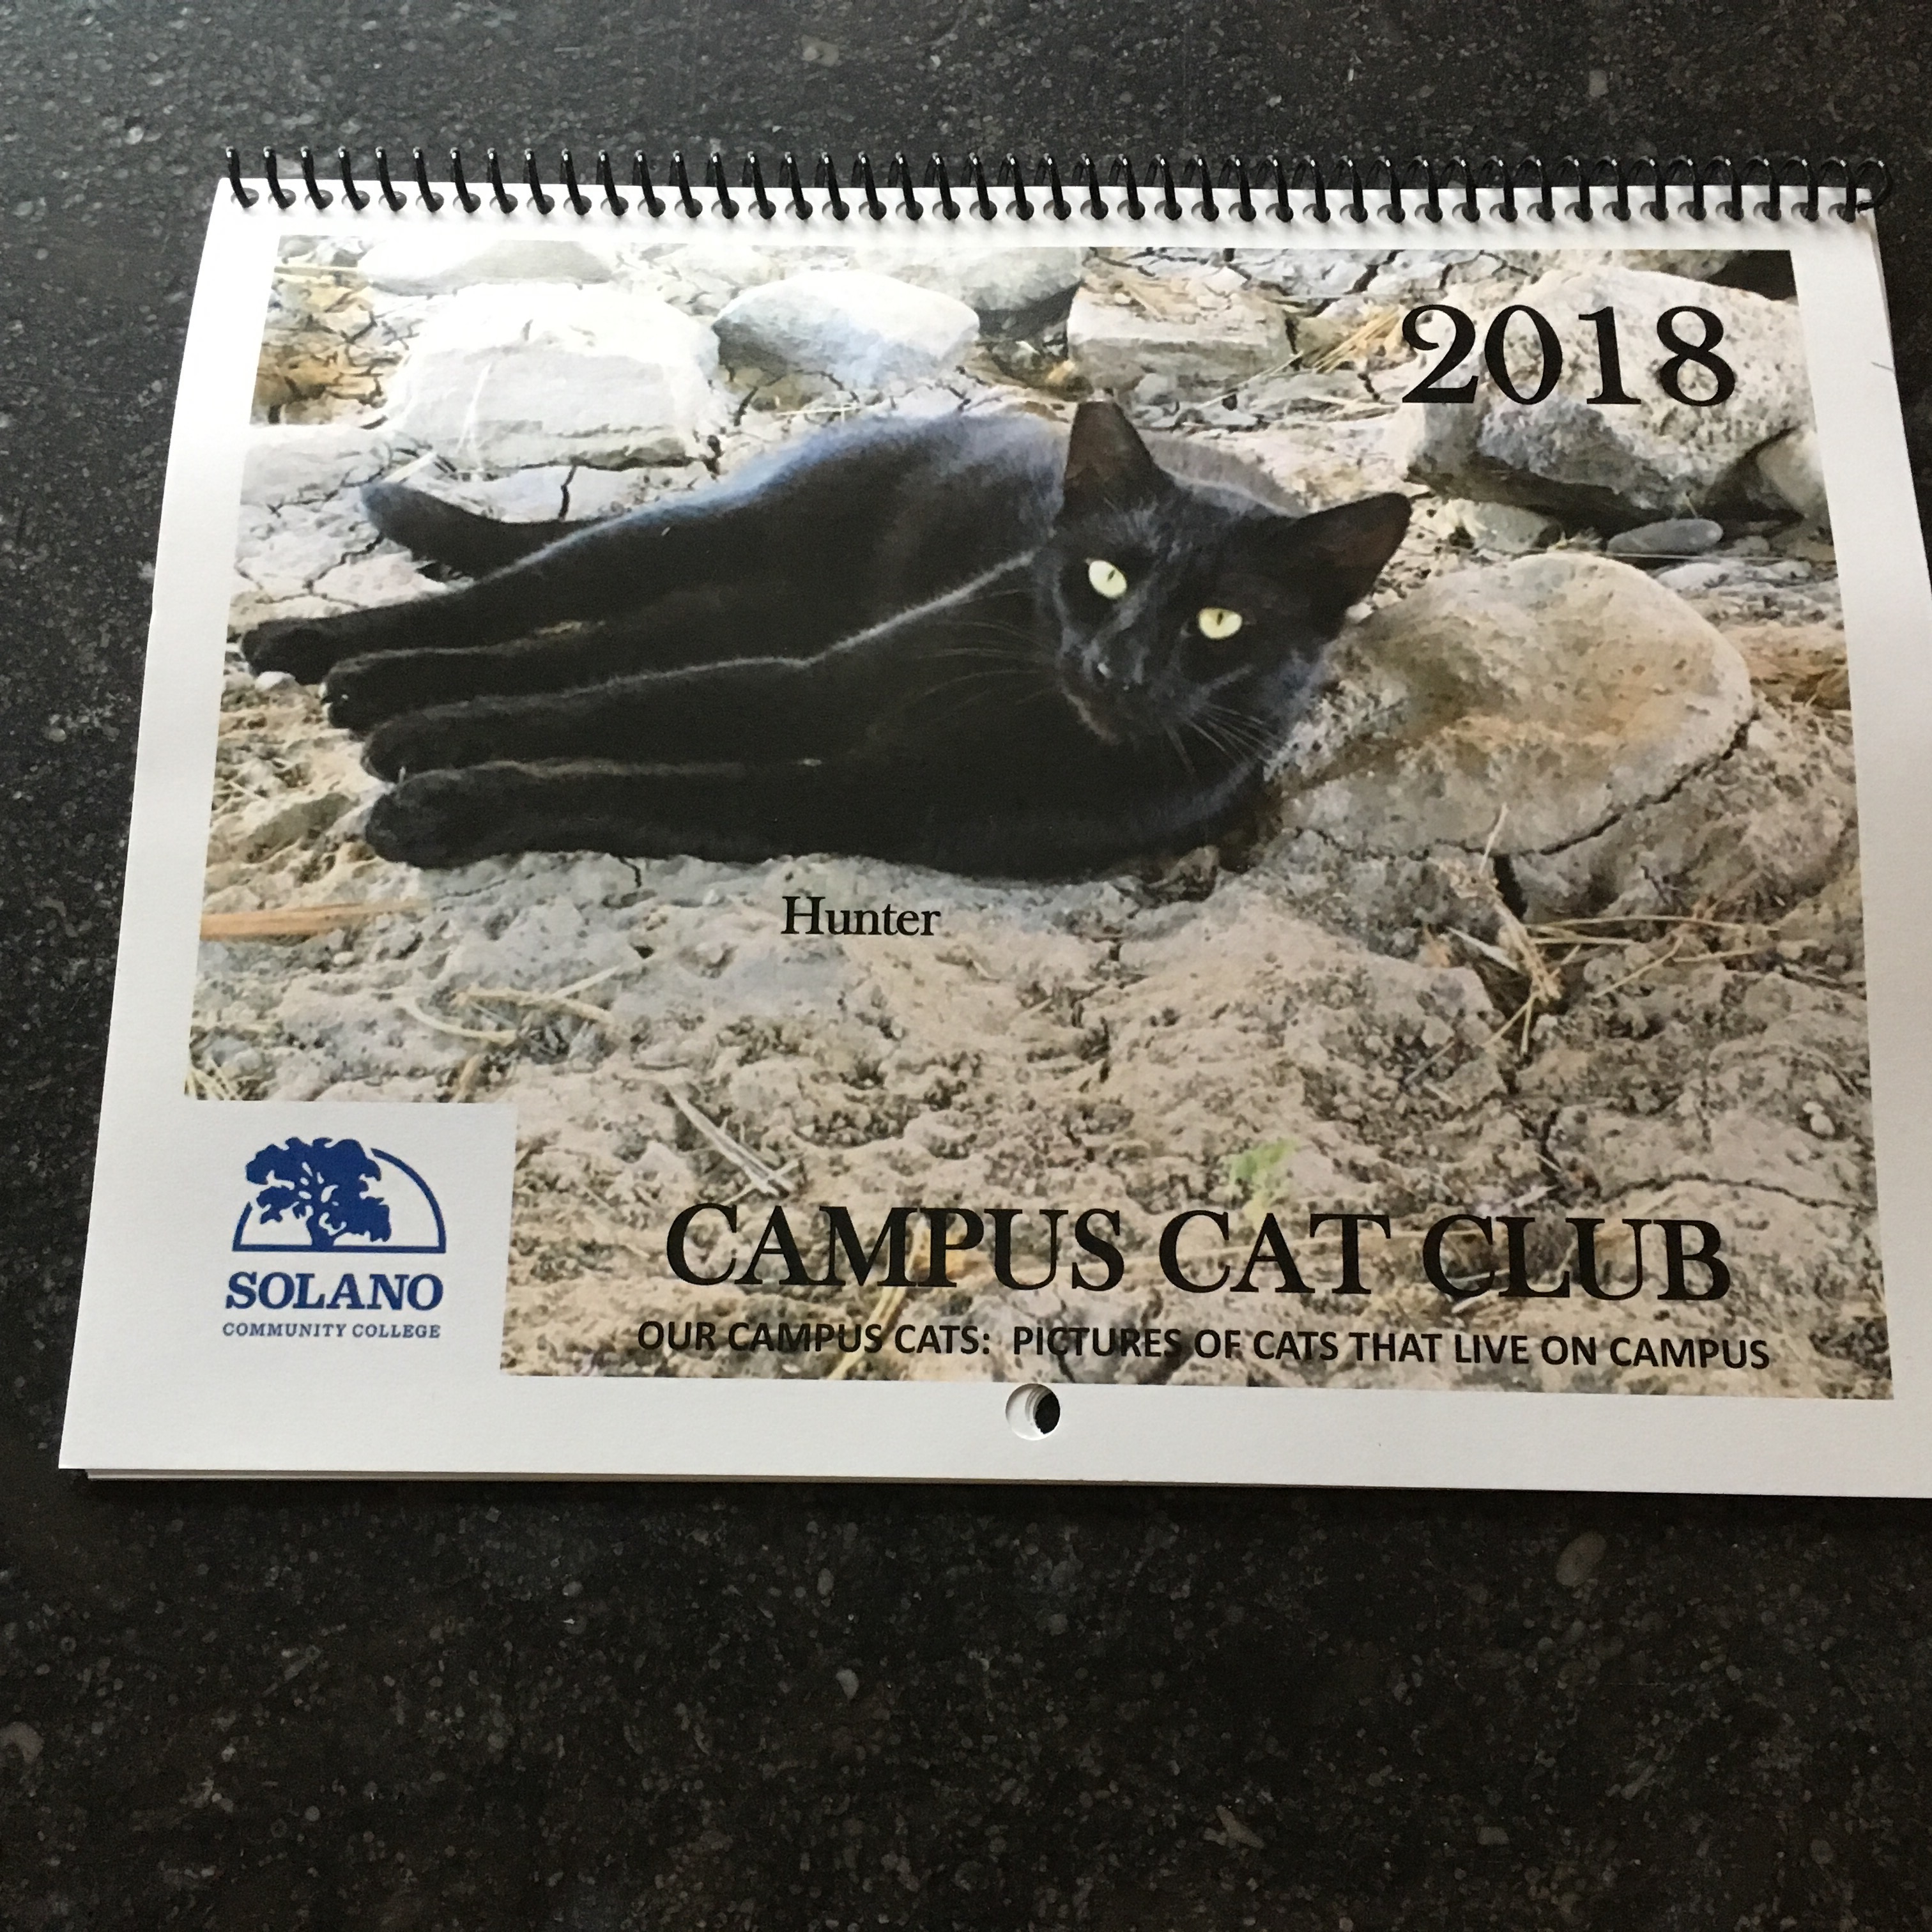 2018 cat calendar